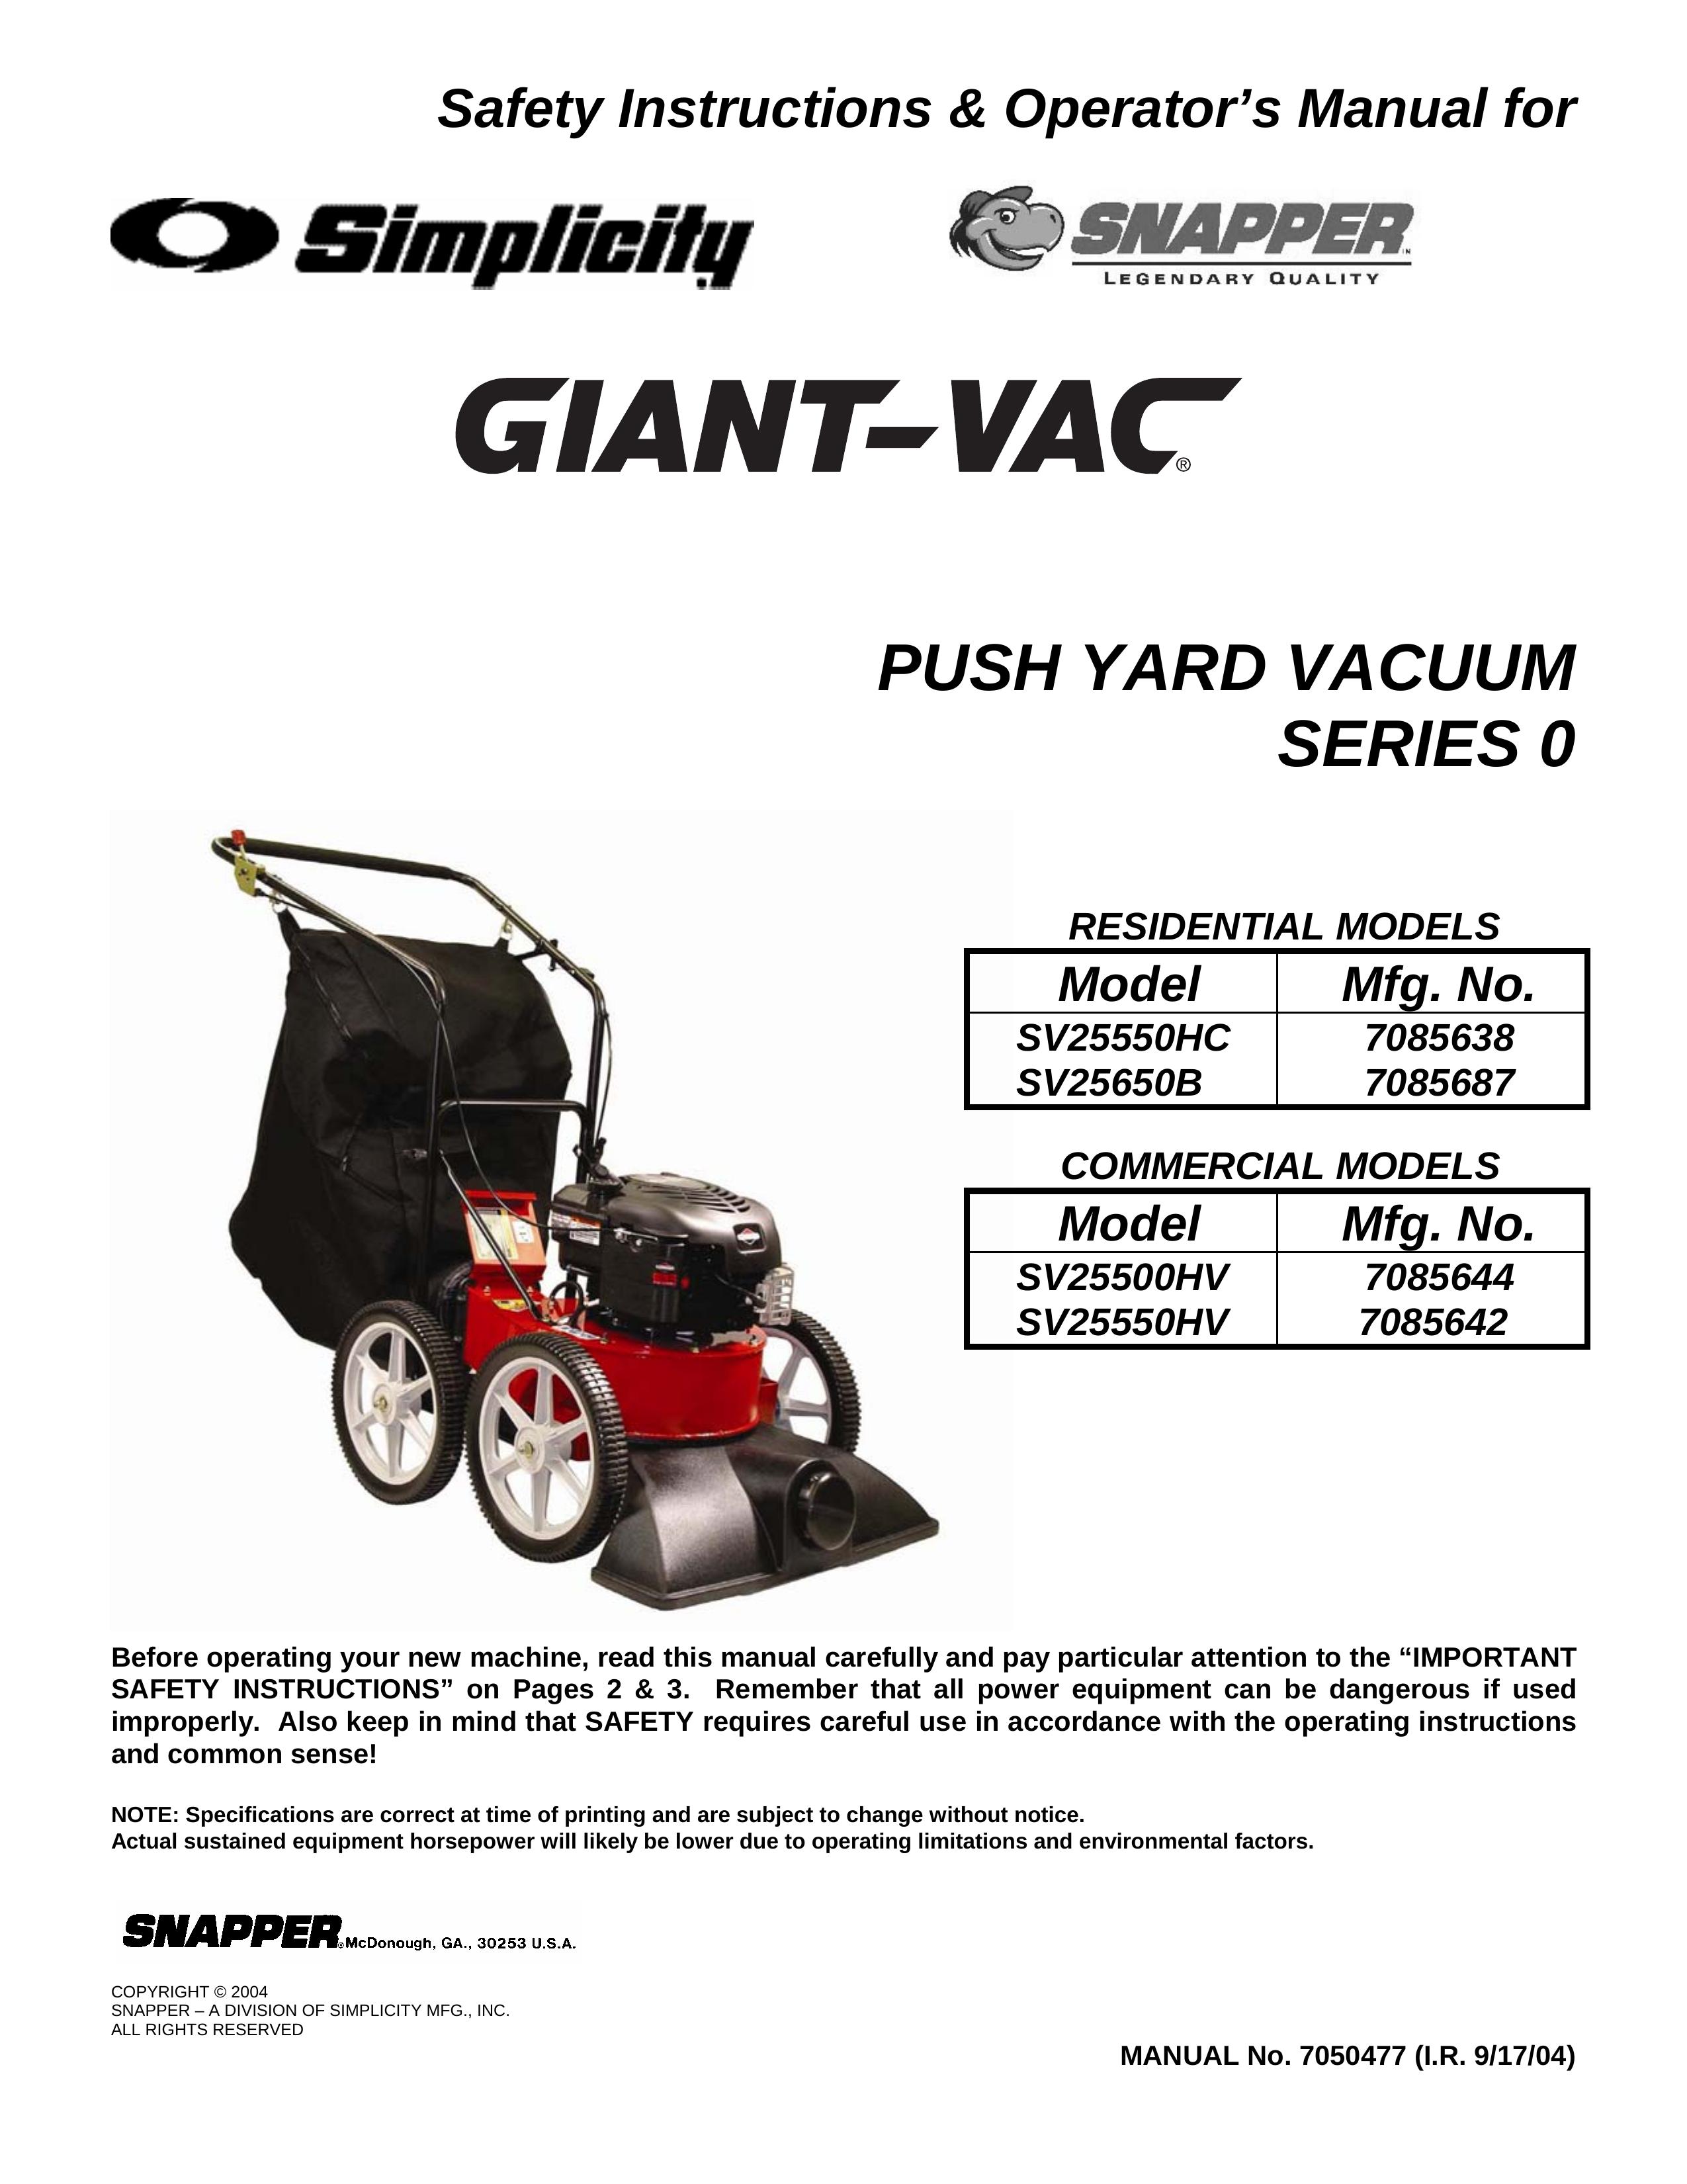 Snapper SV25650B, ESV25650B, SV25550HV Yard Vacuum User Manual